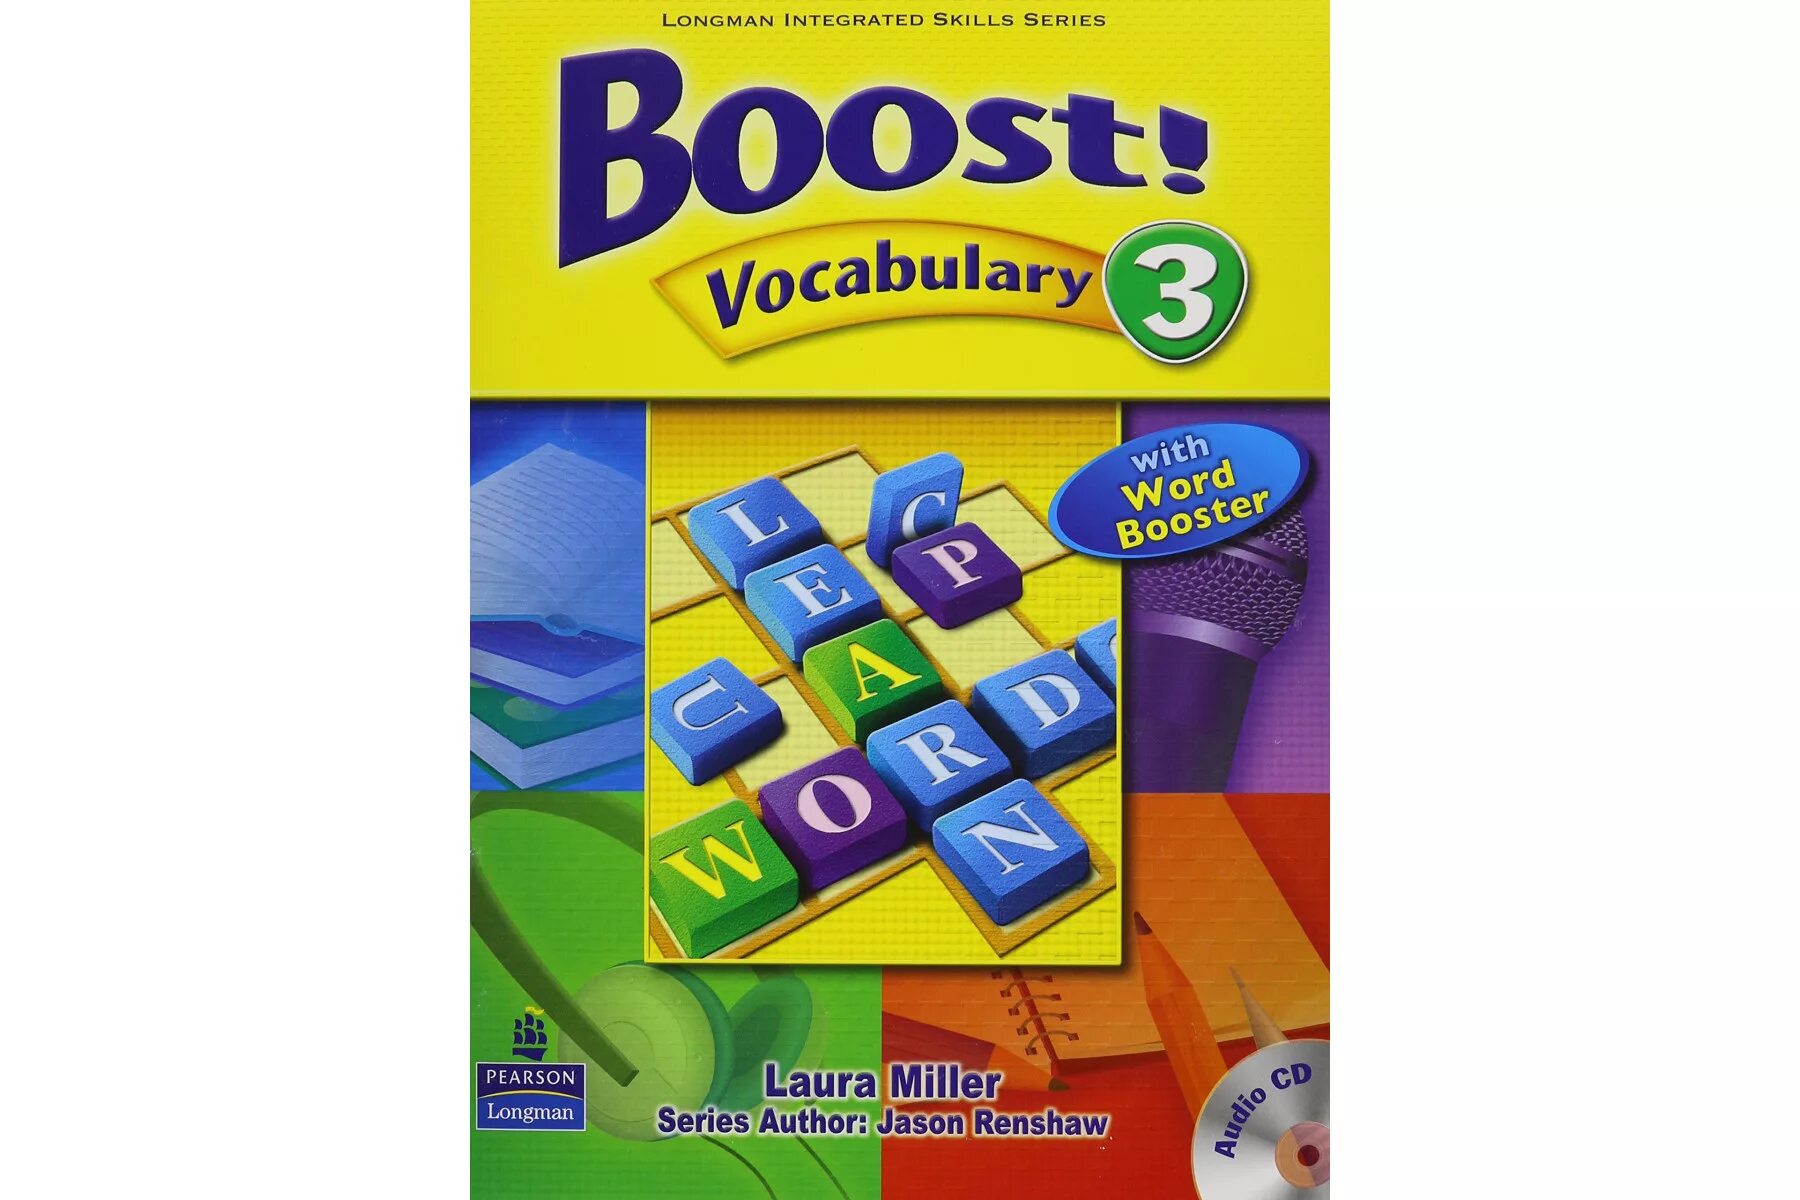 Boost Vocabulary. Boost your Vocabulary учебники. Vocab Boost. Skill Boost учебник. Vocabulary 2 book